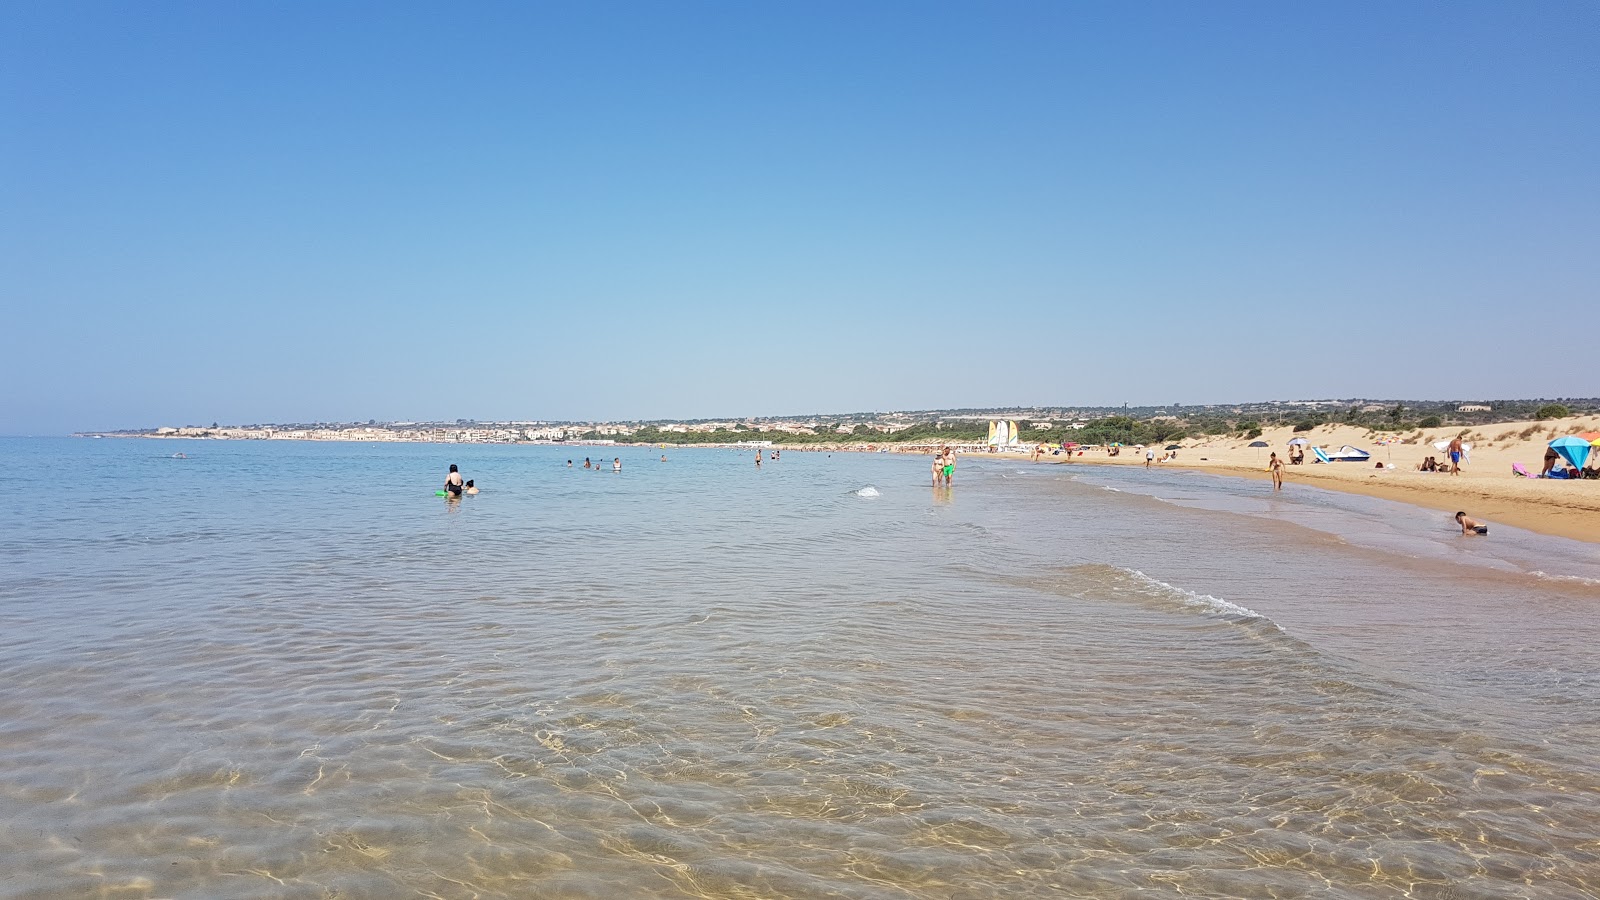 Foto de Spiaggia Di Sampieri - lugar popular entre os apreciadores de relaxamento